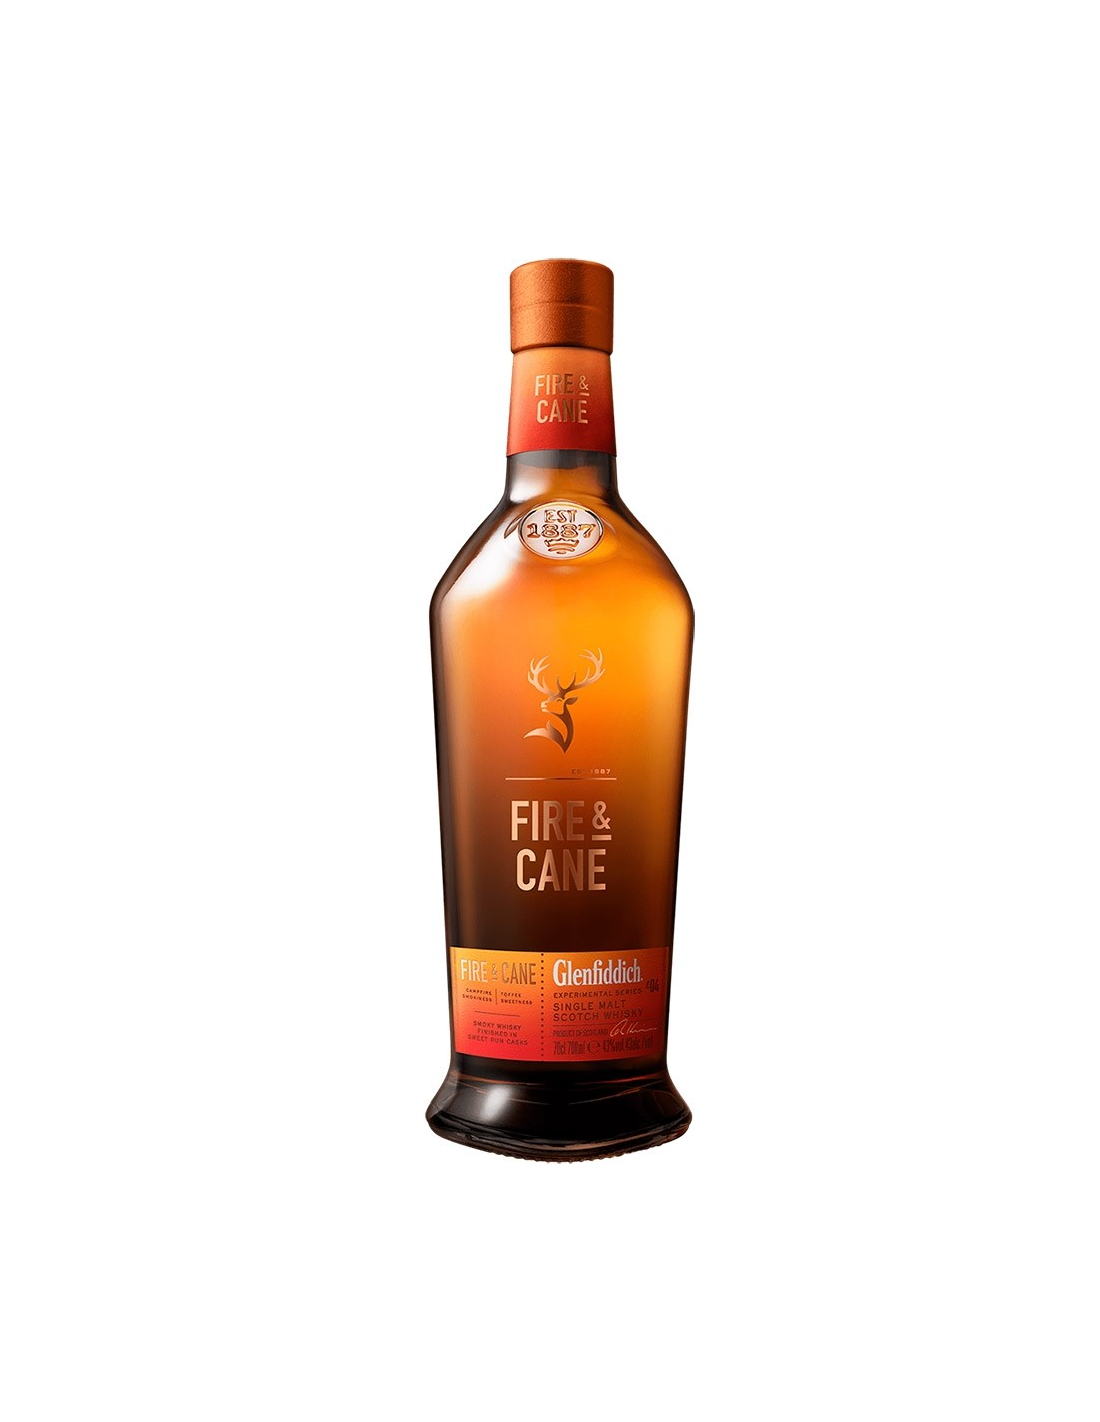 Whisky Glenfiddich Fire & Cane, 0.7L, 43% alc., Scotia alcooldiscount.ro